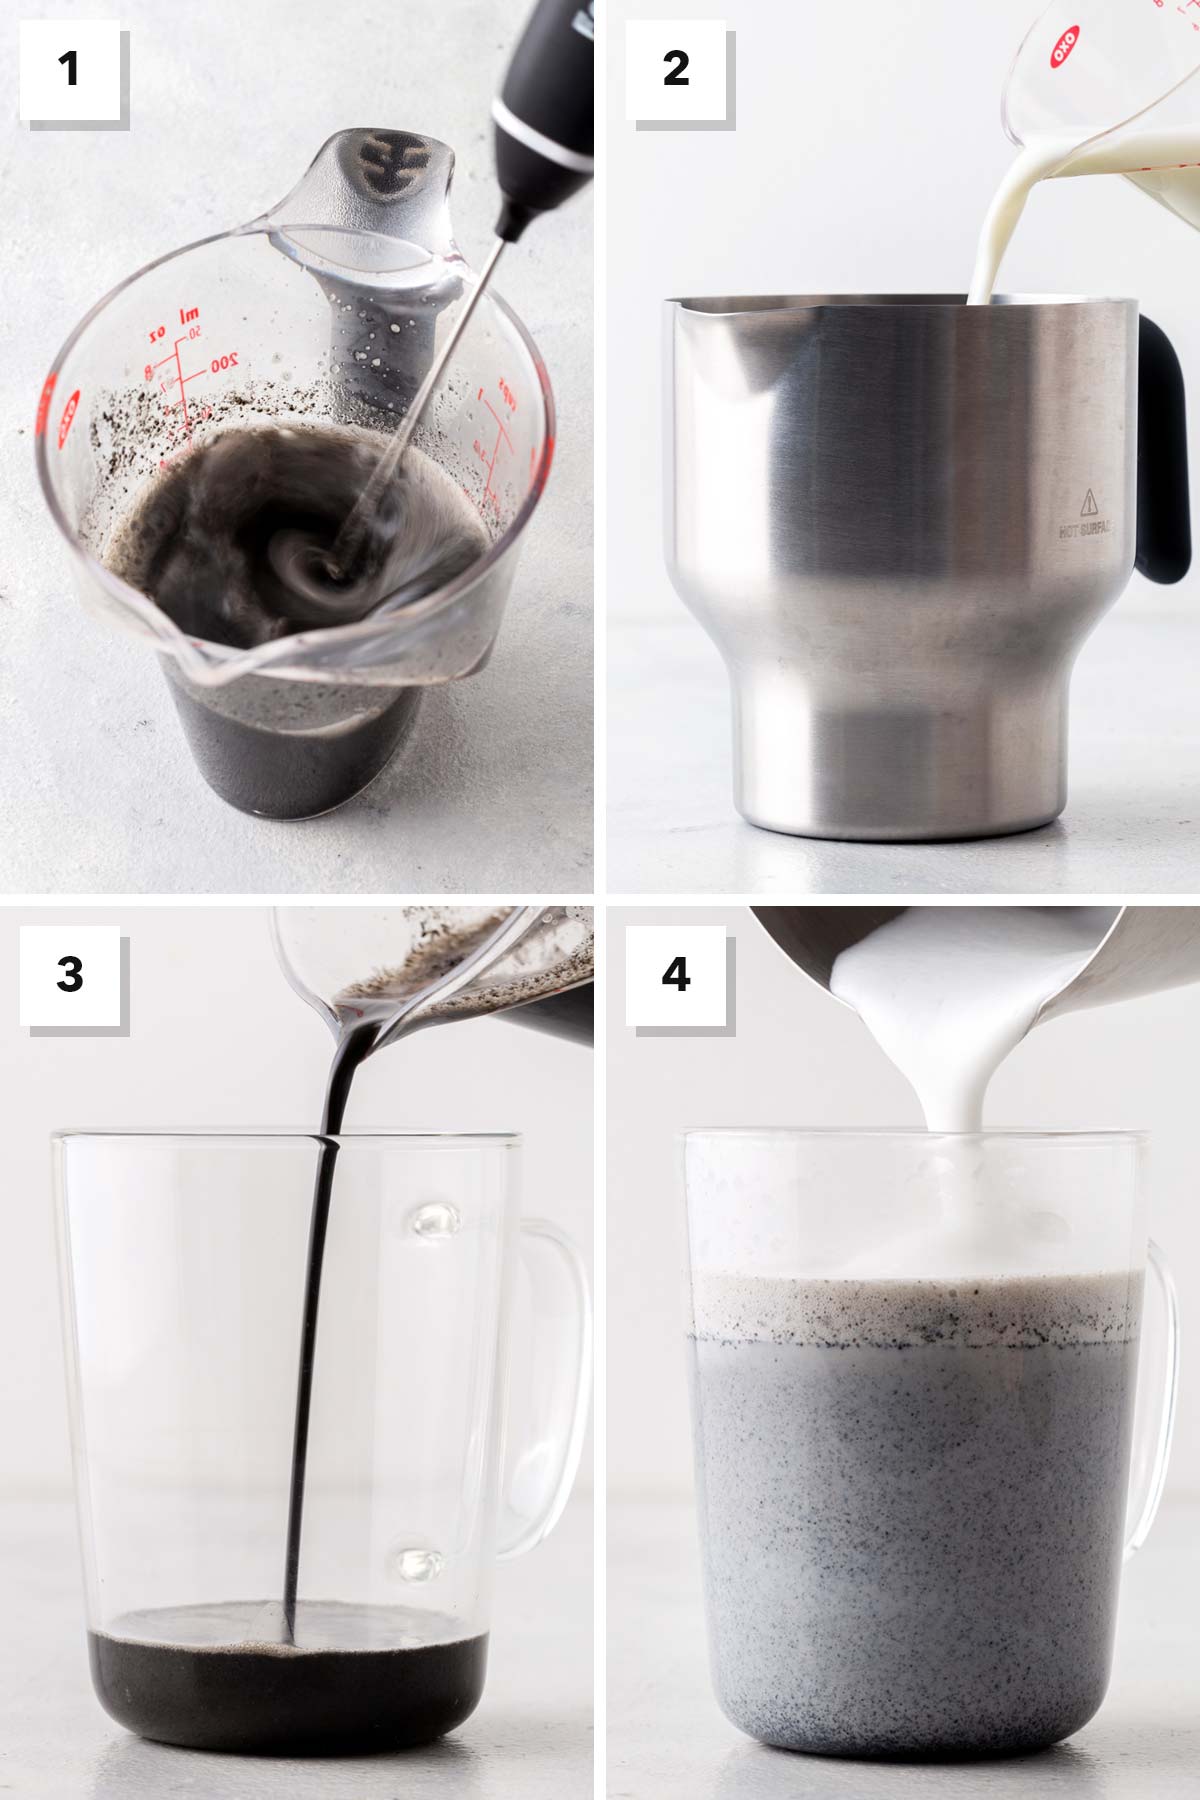 Black Sesame Latte instructional steps in photos.